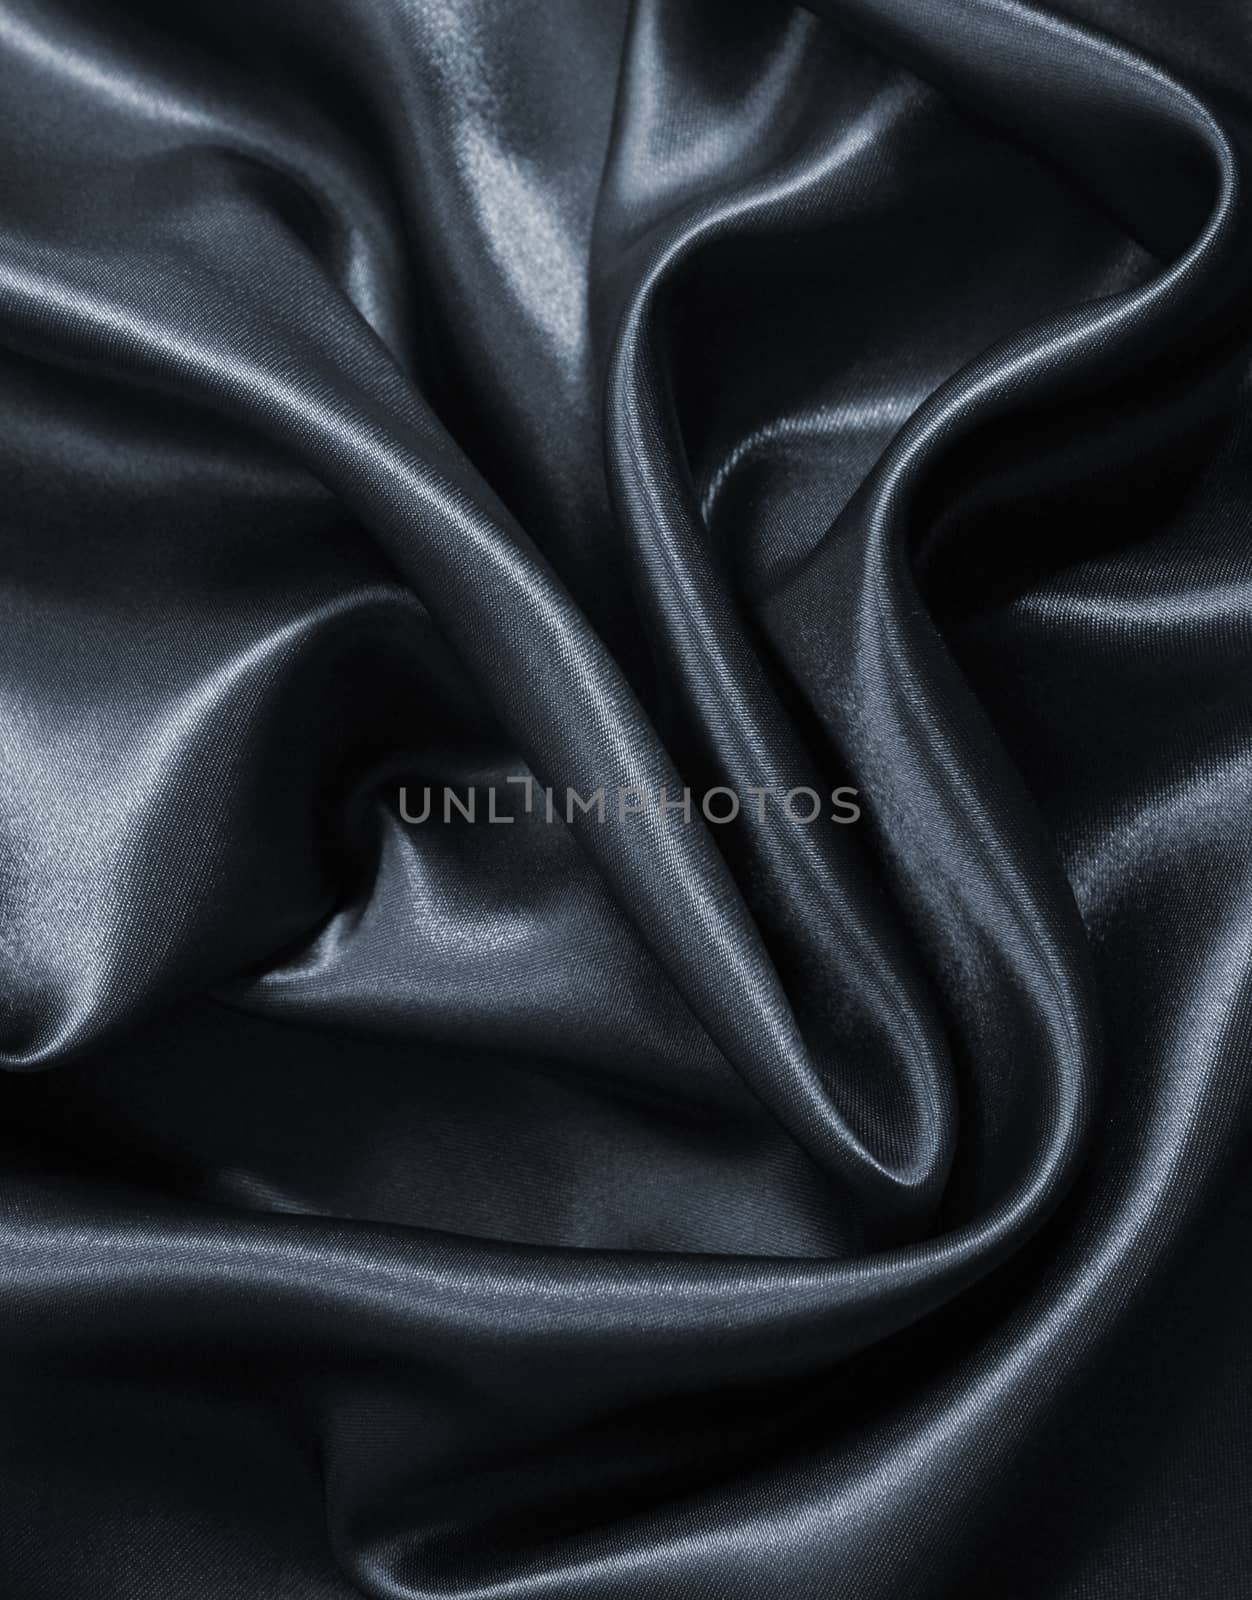 Smooth elegant dark grey silk or satin as background  by oxanatravel